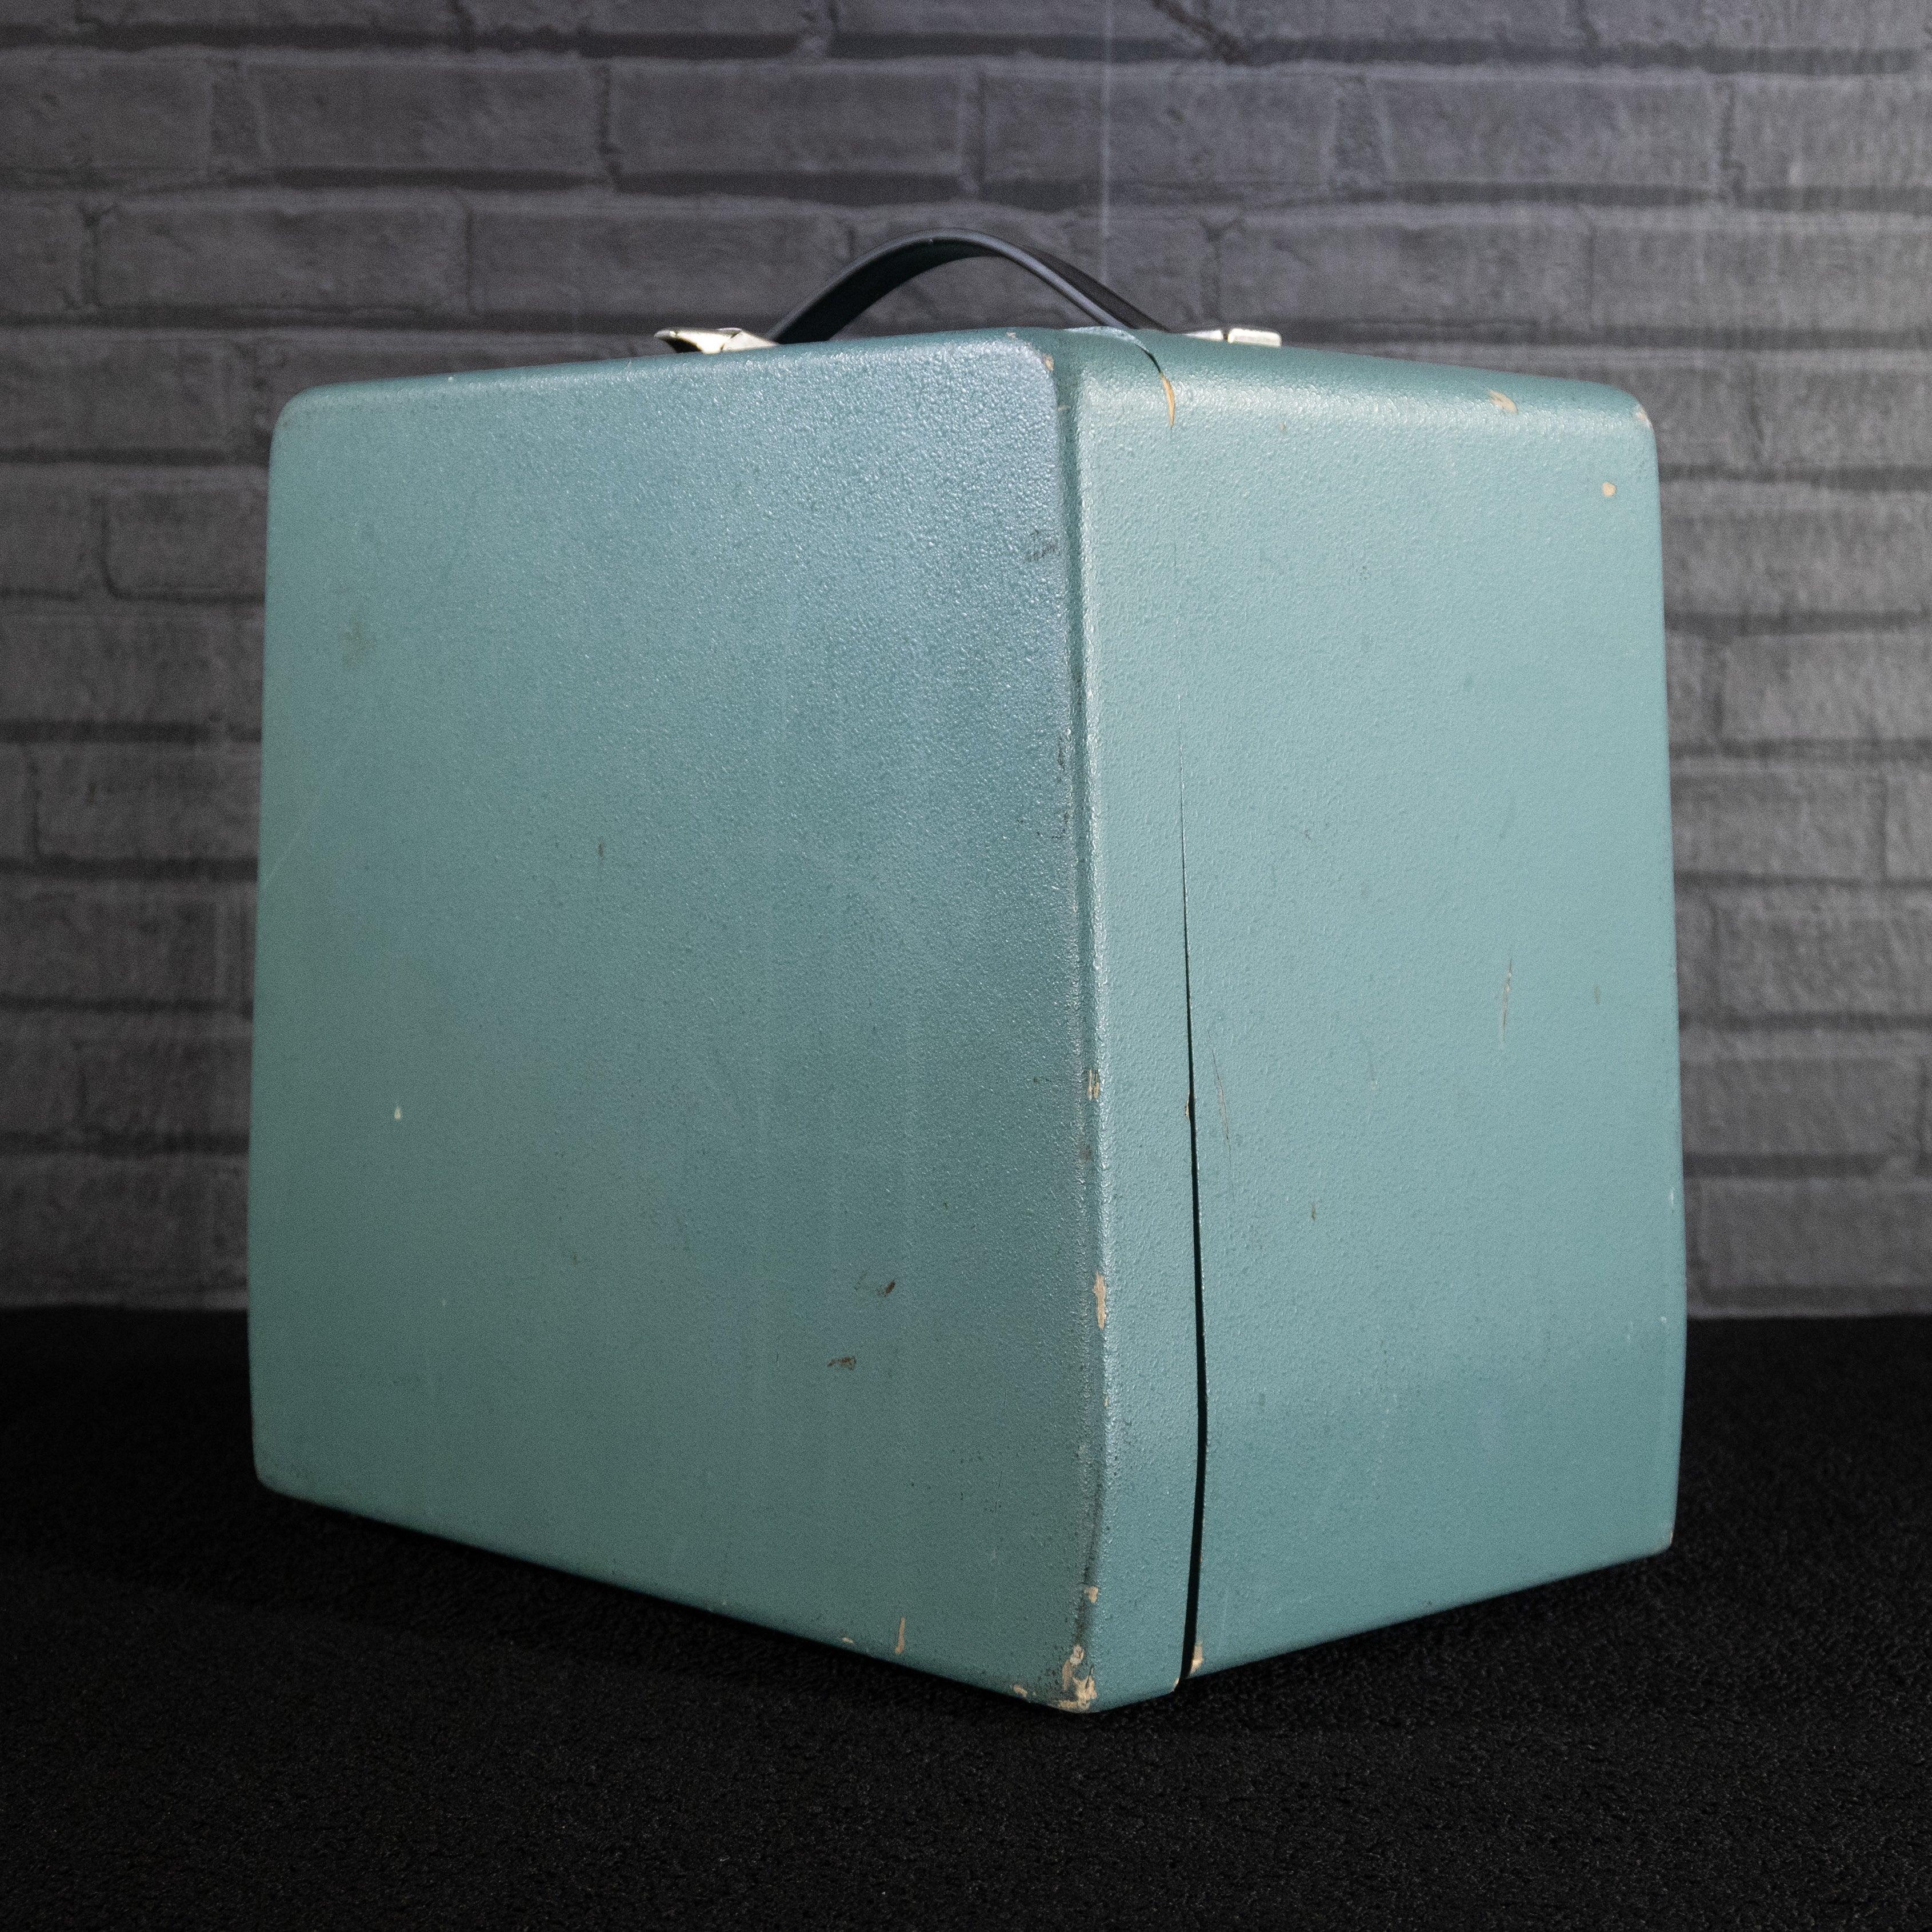 Bell & Howell 1960s Vintage Speaker Cabinet (Robin Blue) USED